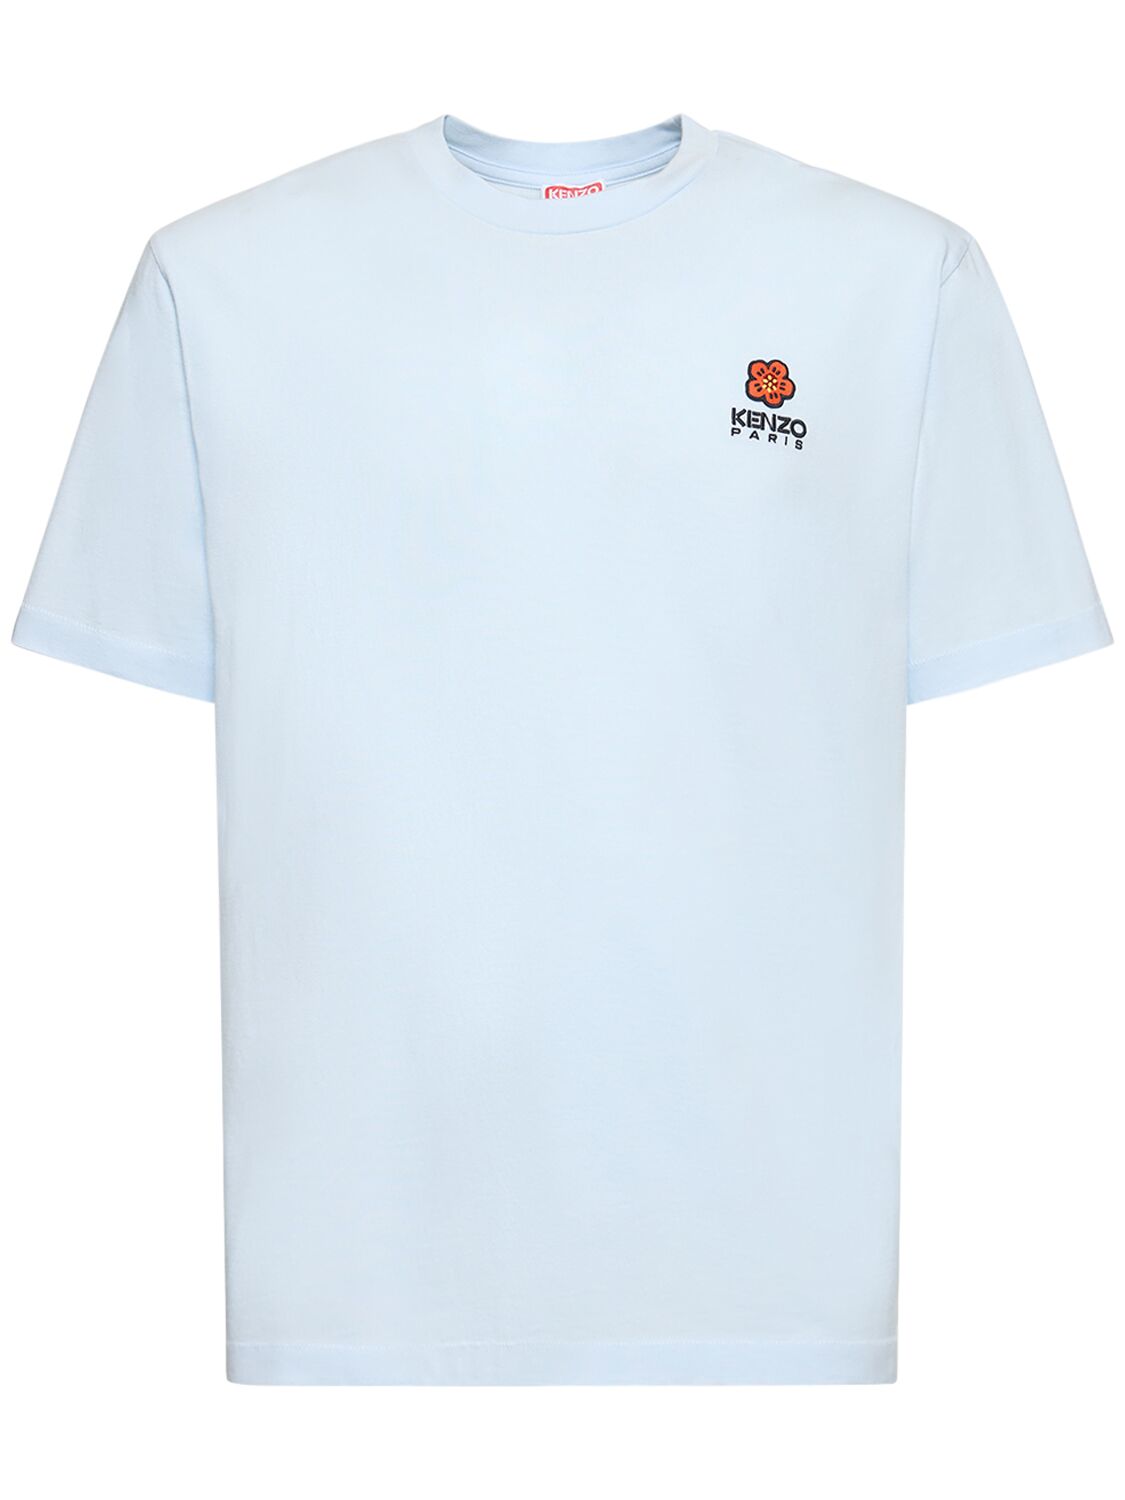 T-shirt Boke In Jersey Di Cotone Con Logo - KENZO PARIS - Modalova